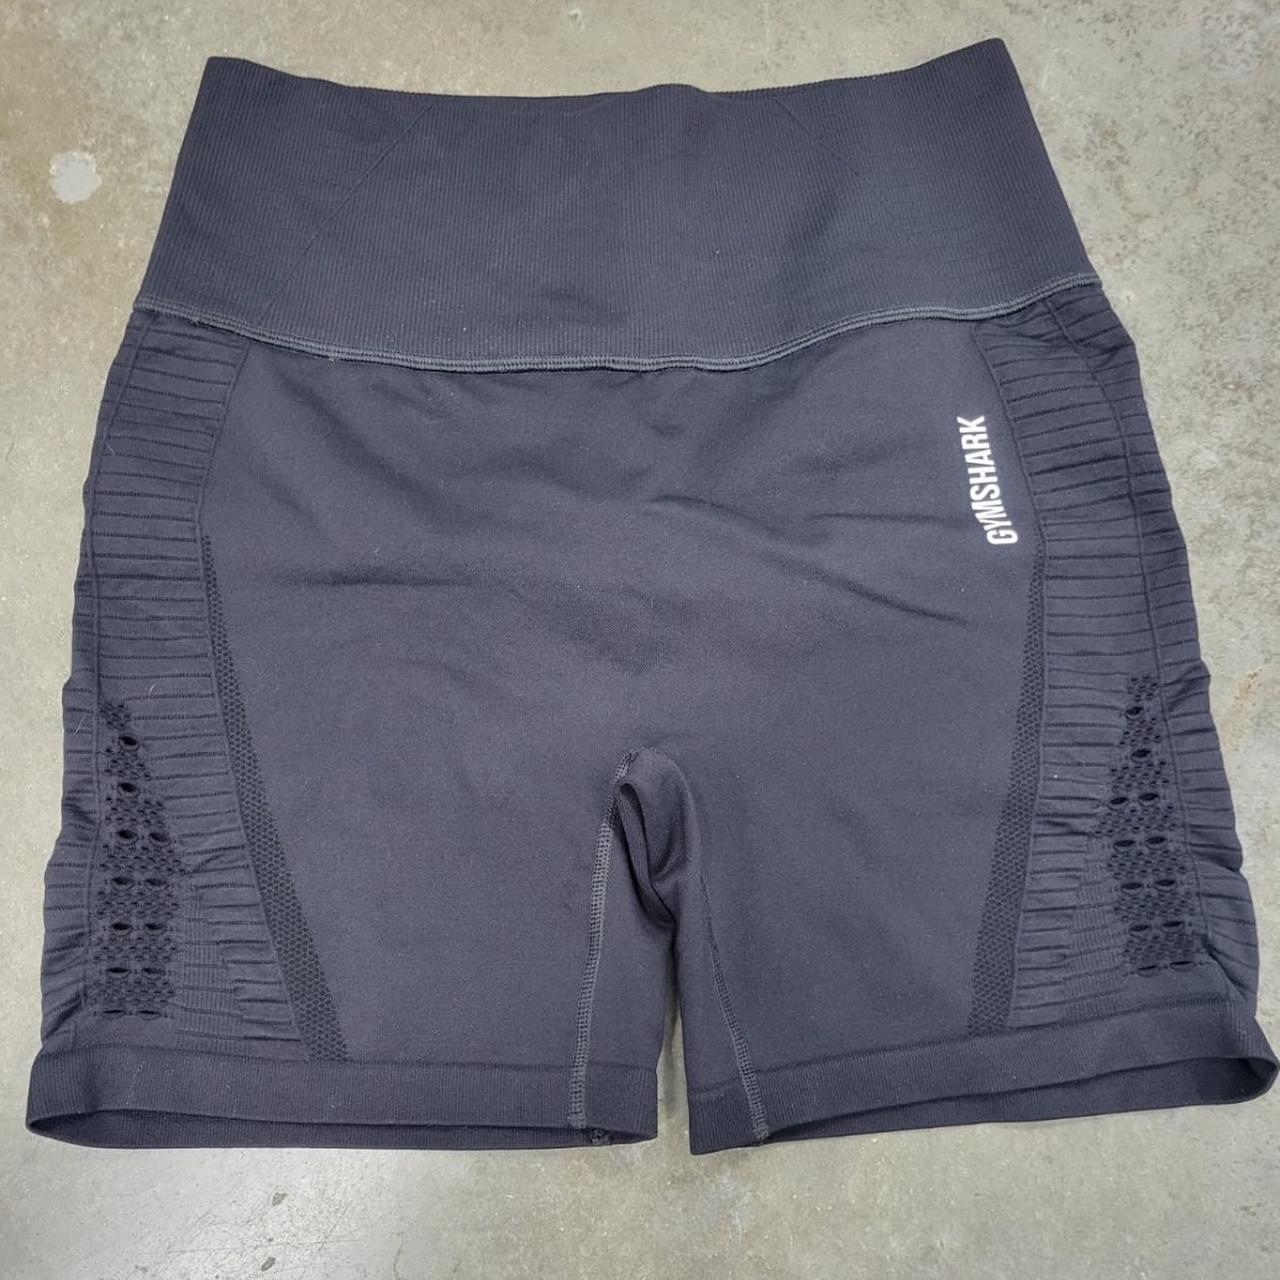 Black Seamless Spandex Shorts Central Washington - Depop